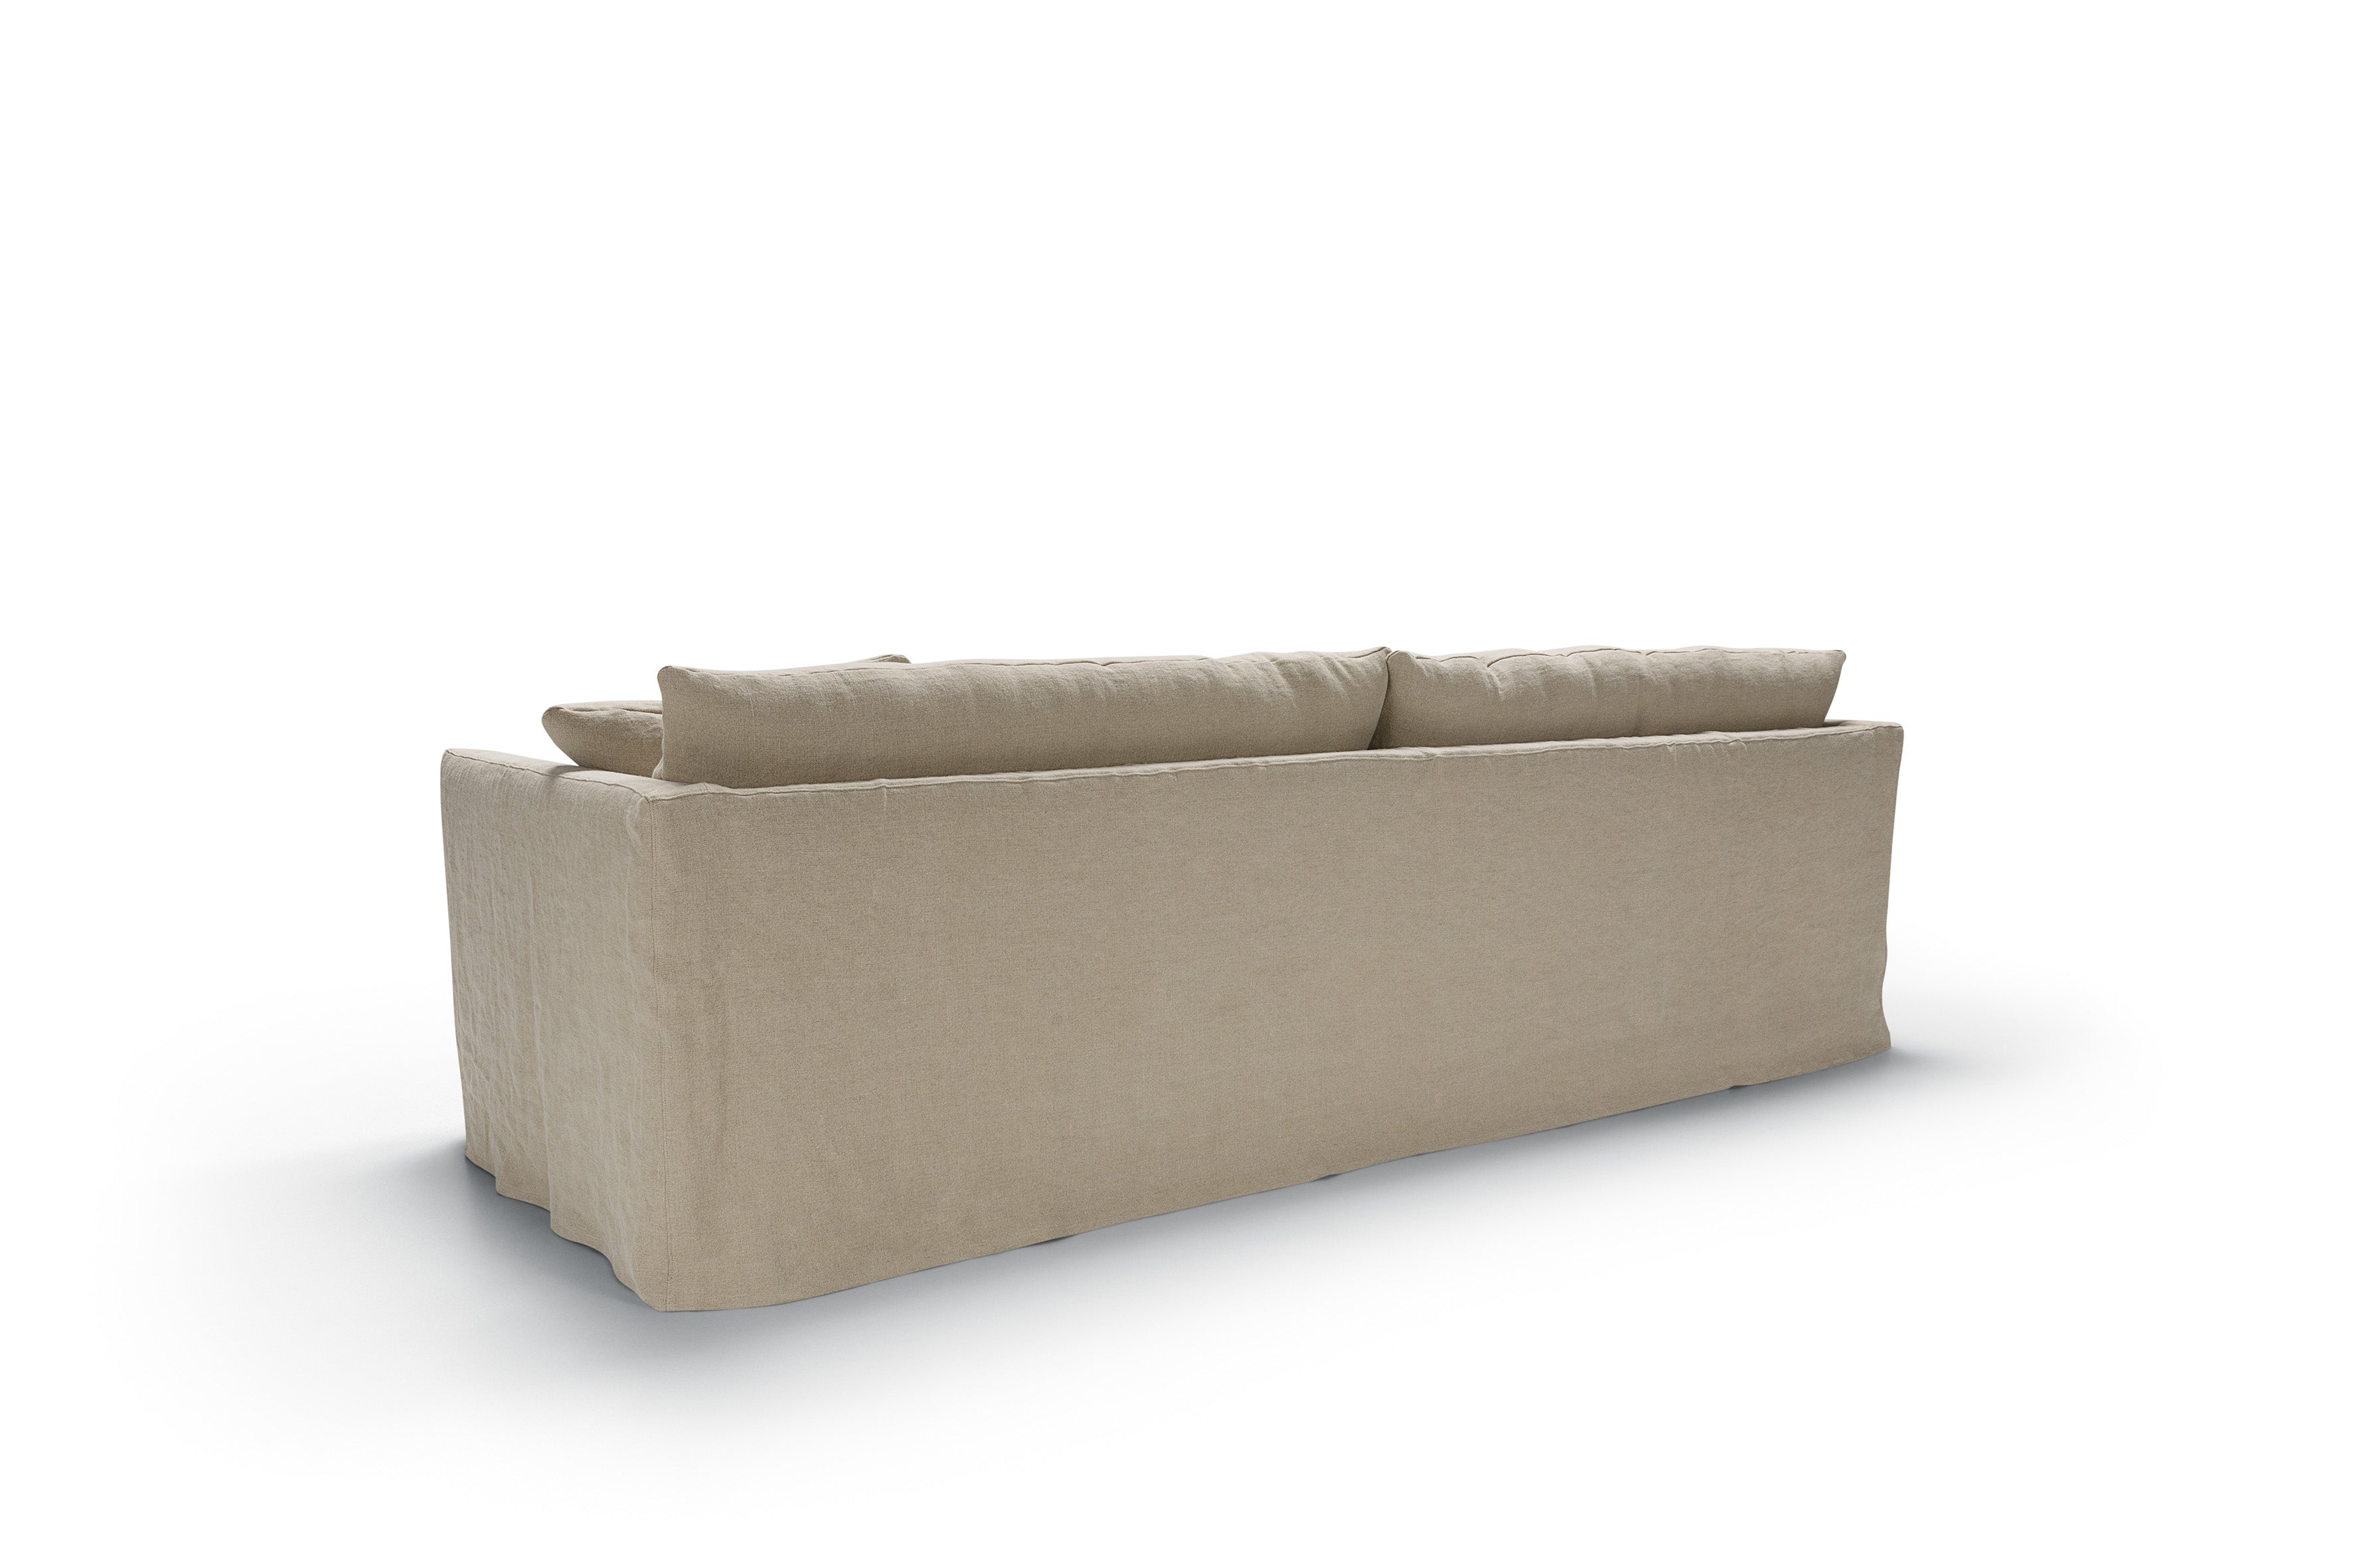 Mastrella Lana 4 Seater Sofa with Loose Cover